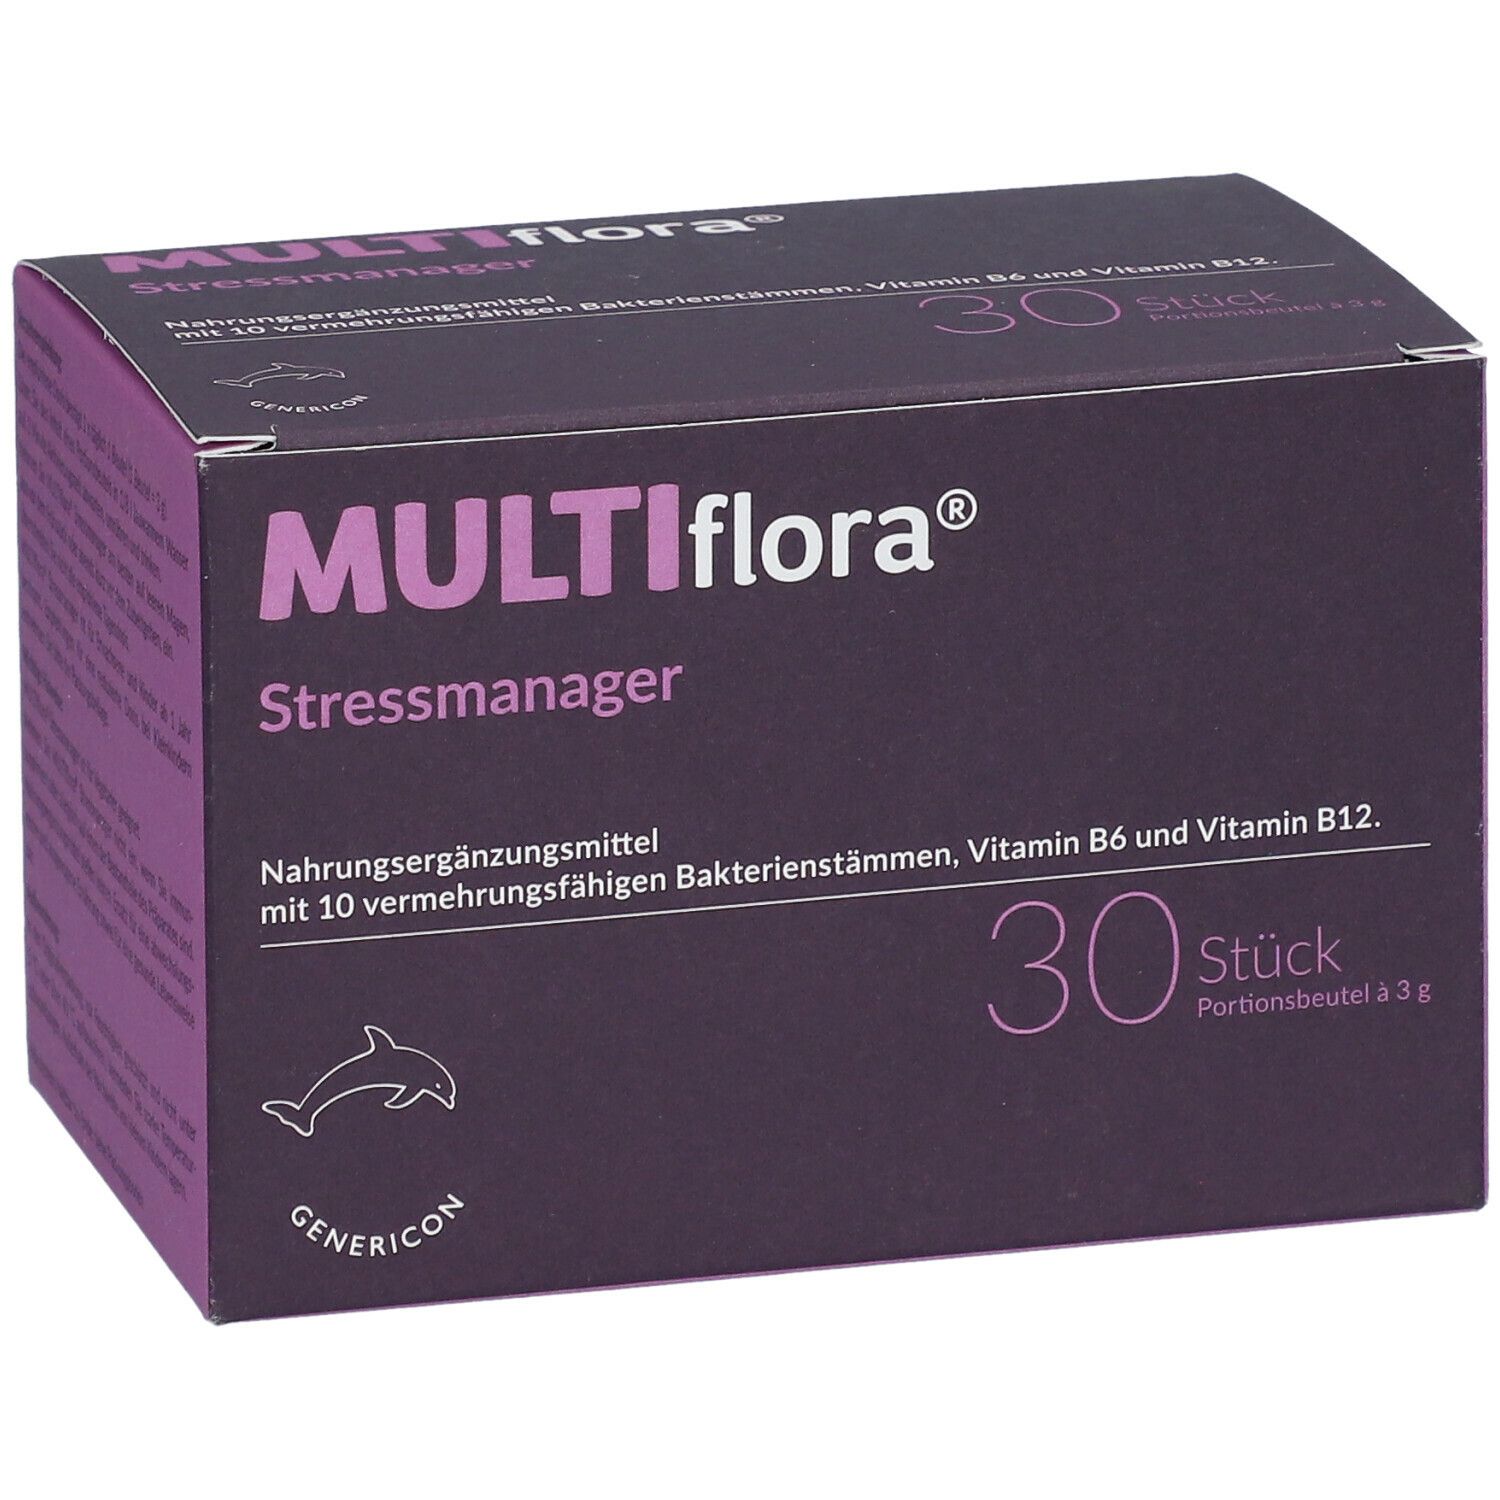 MULTIflora® Stressmanager